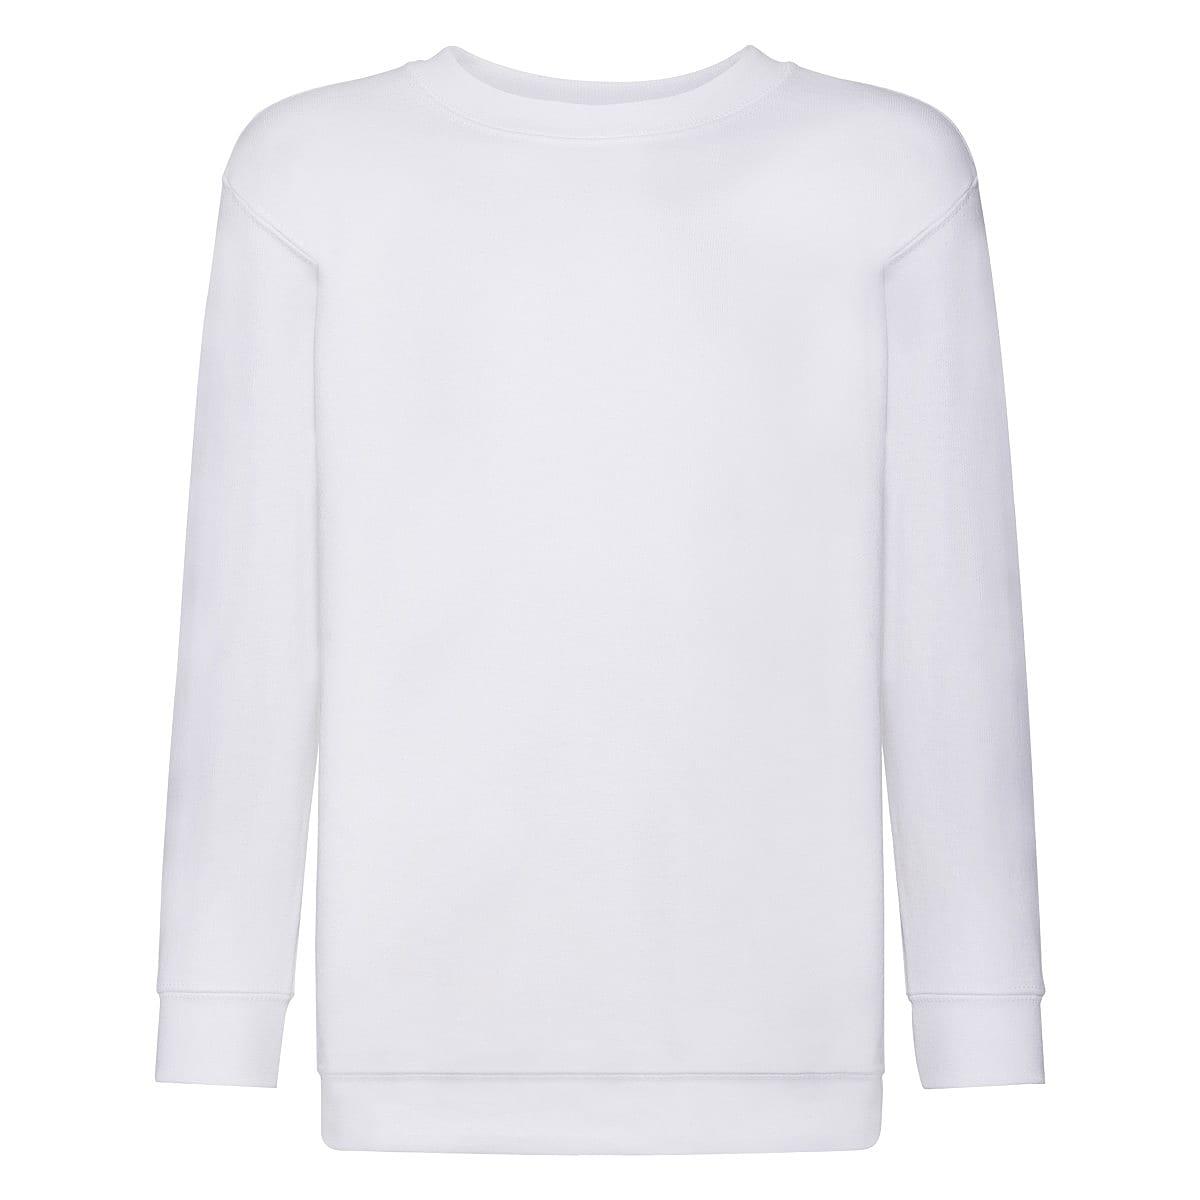 Fruit Of The Loom Childrens Set in Sleeve Sweatshirt in White (Product Code: 62041)